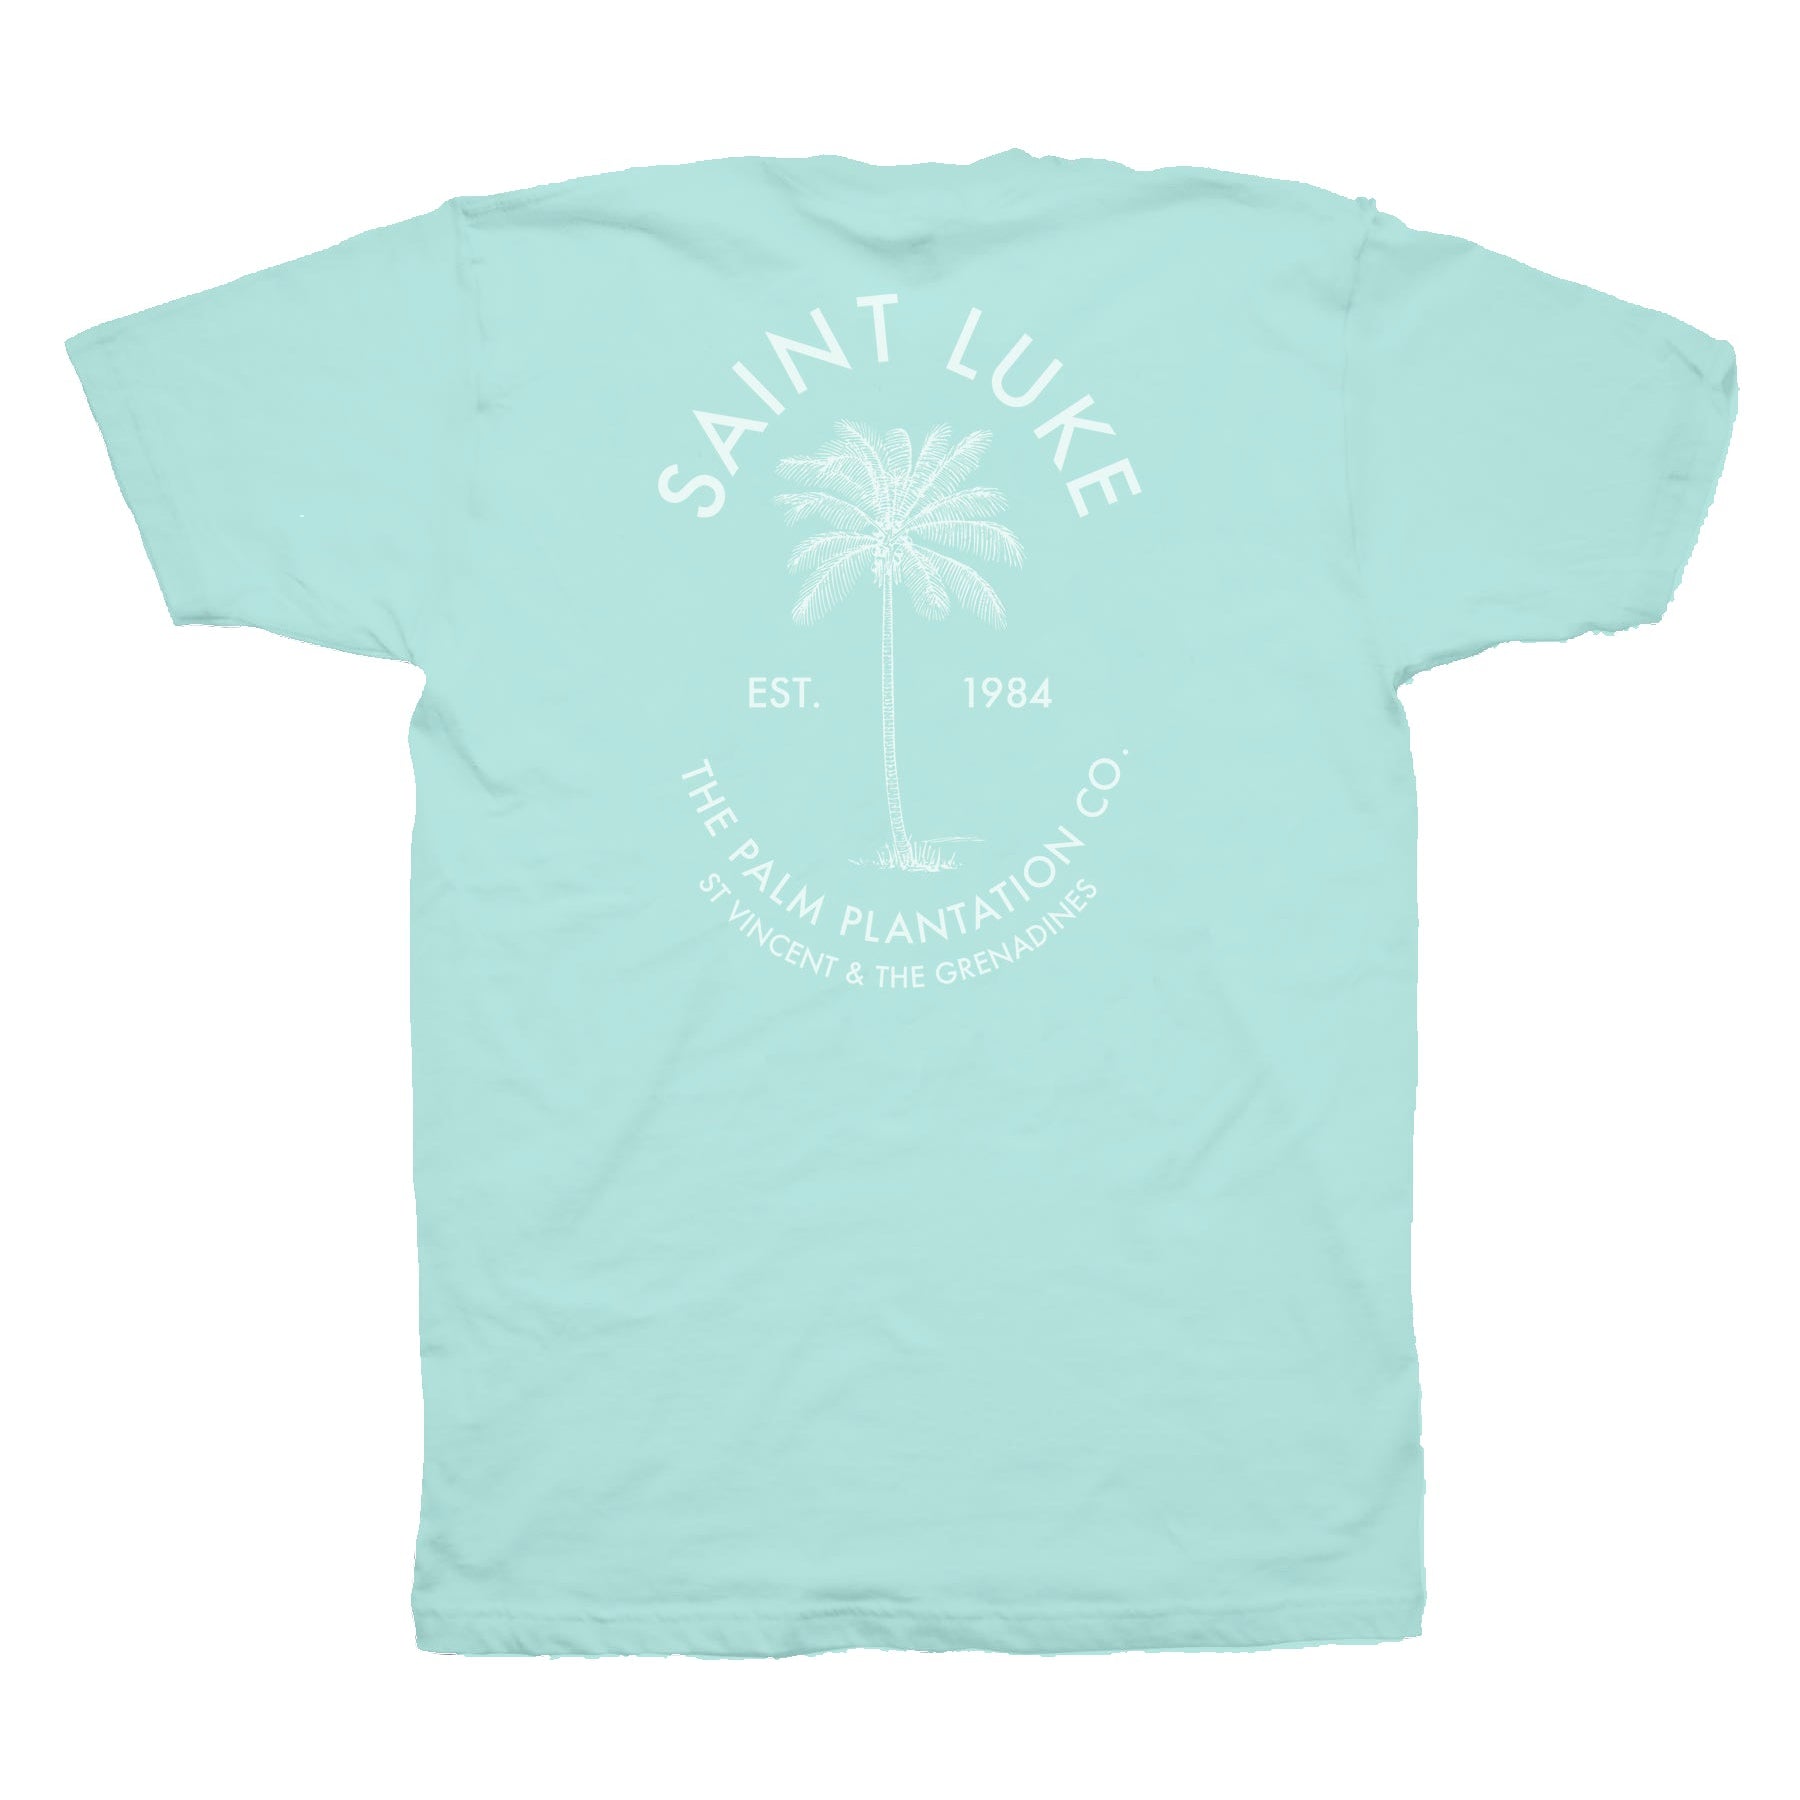 Saint Luke Palm Plantation Co. T-Shirt in Vintage Green